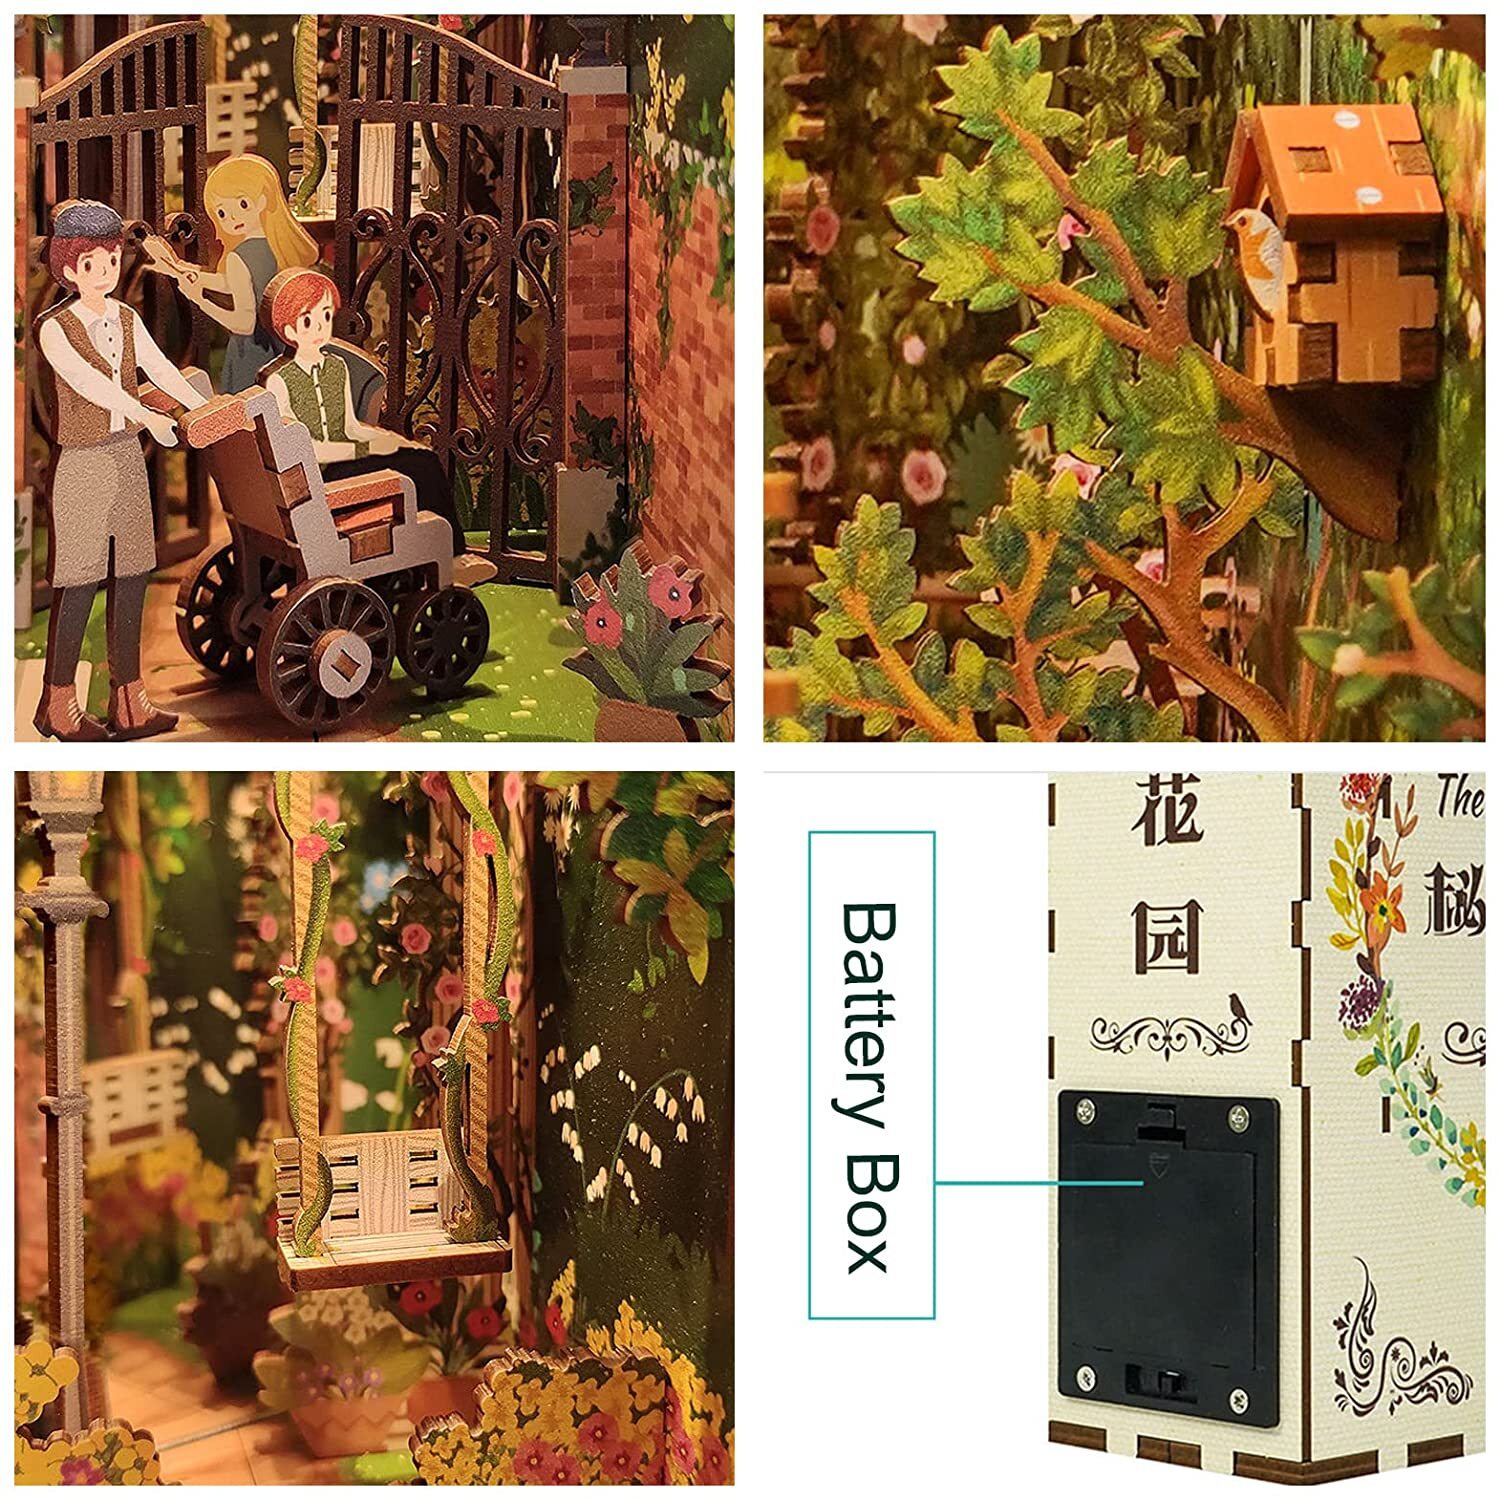 The Secret Garden - 3D Wooden DIY Book Nook Kit with Human Sensor LED Light